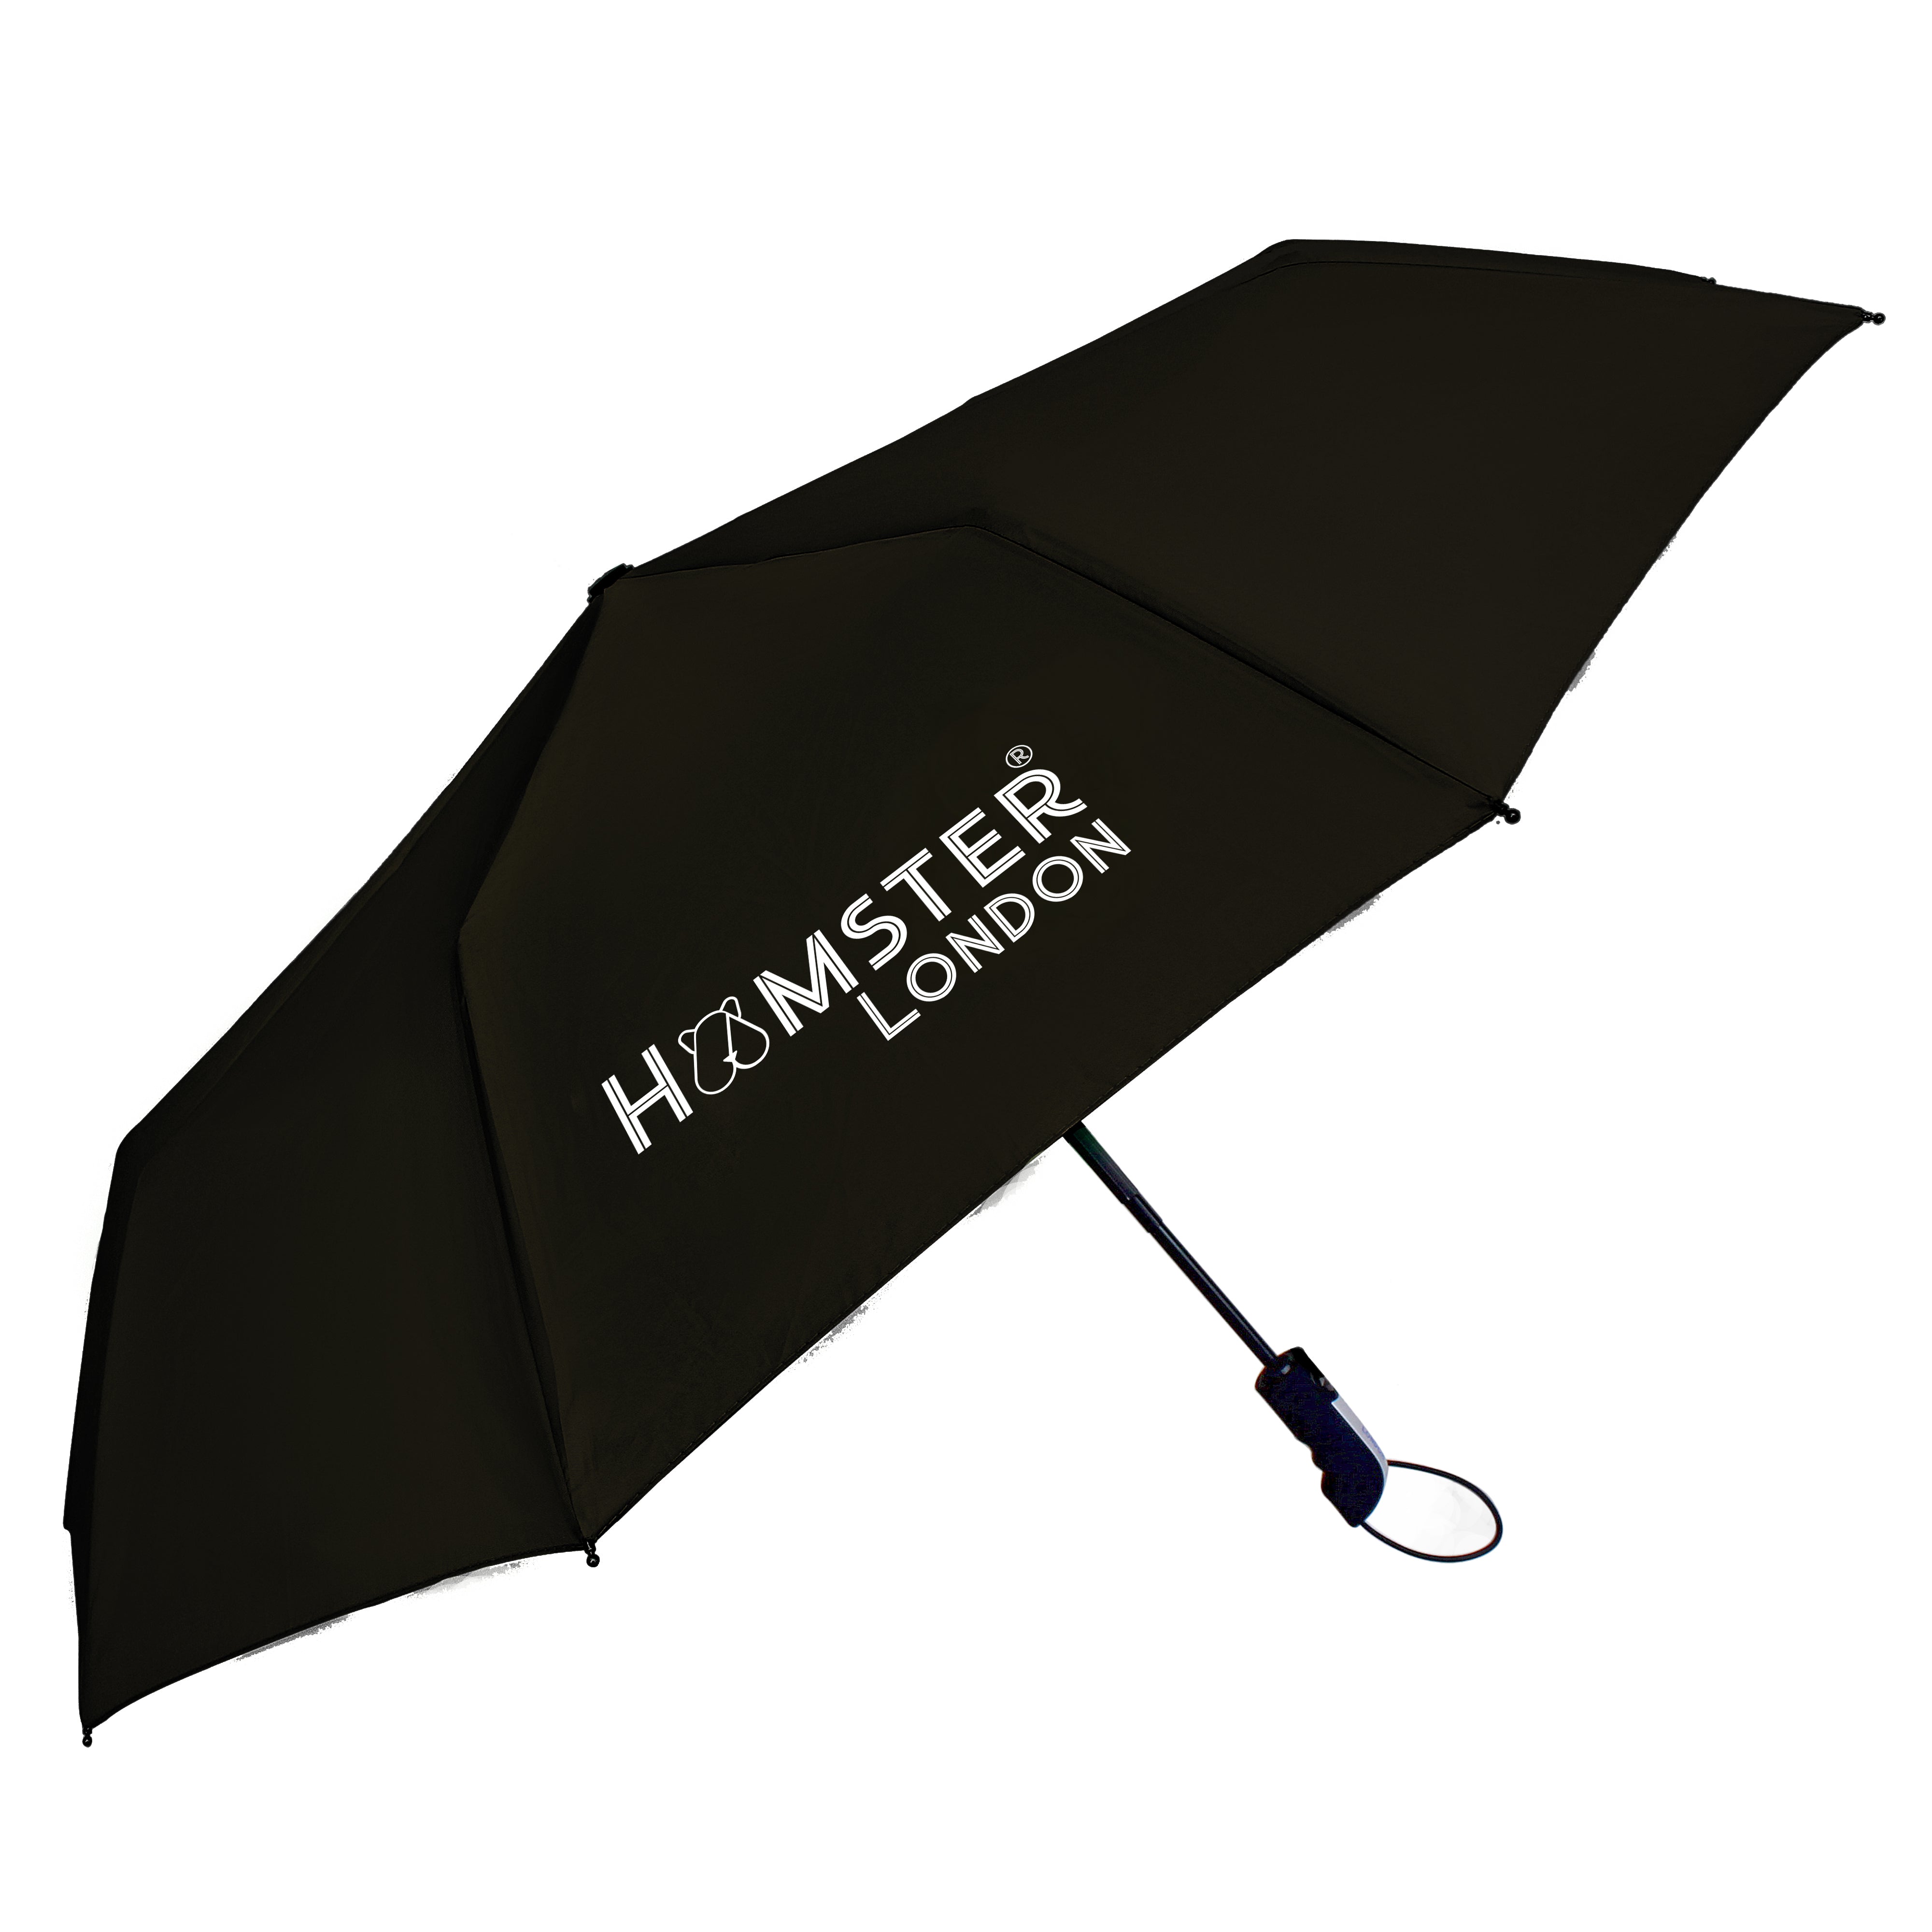 Automatic Open & Close Pocket Folding Umbrella (Dark brown)